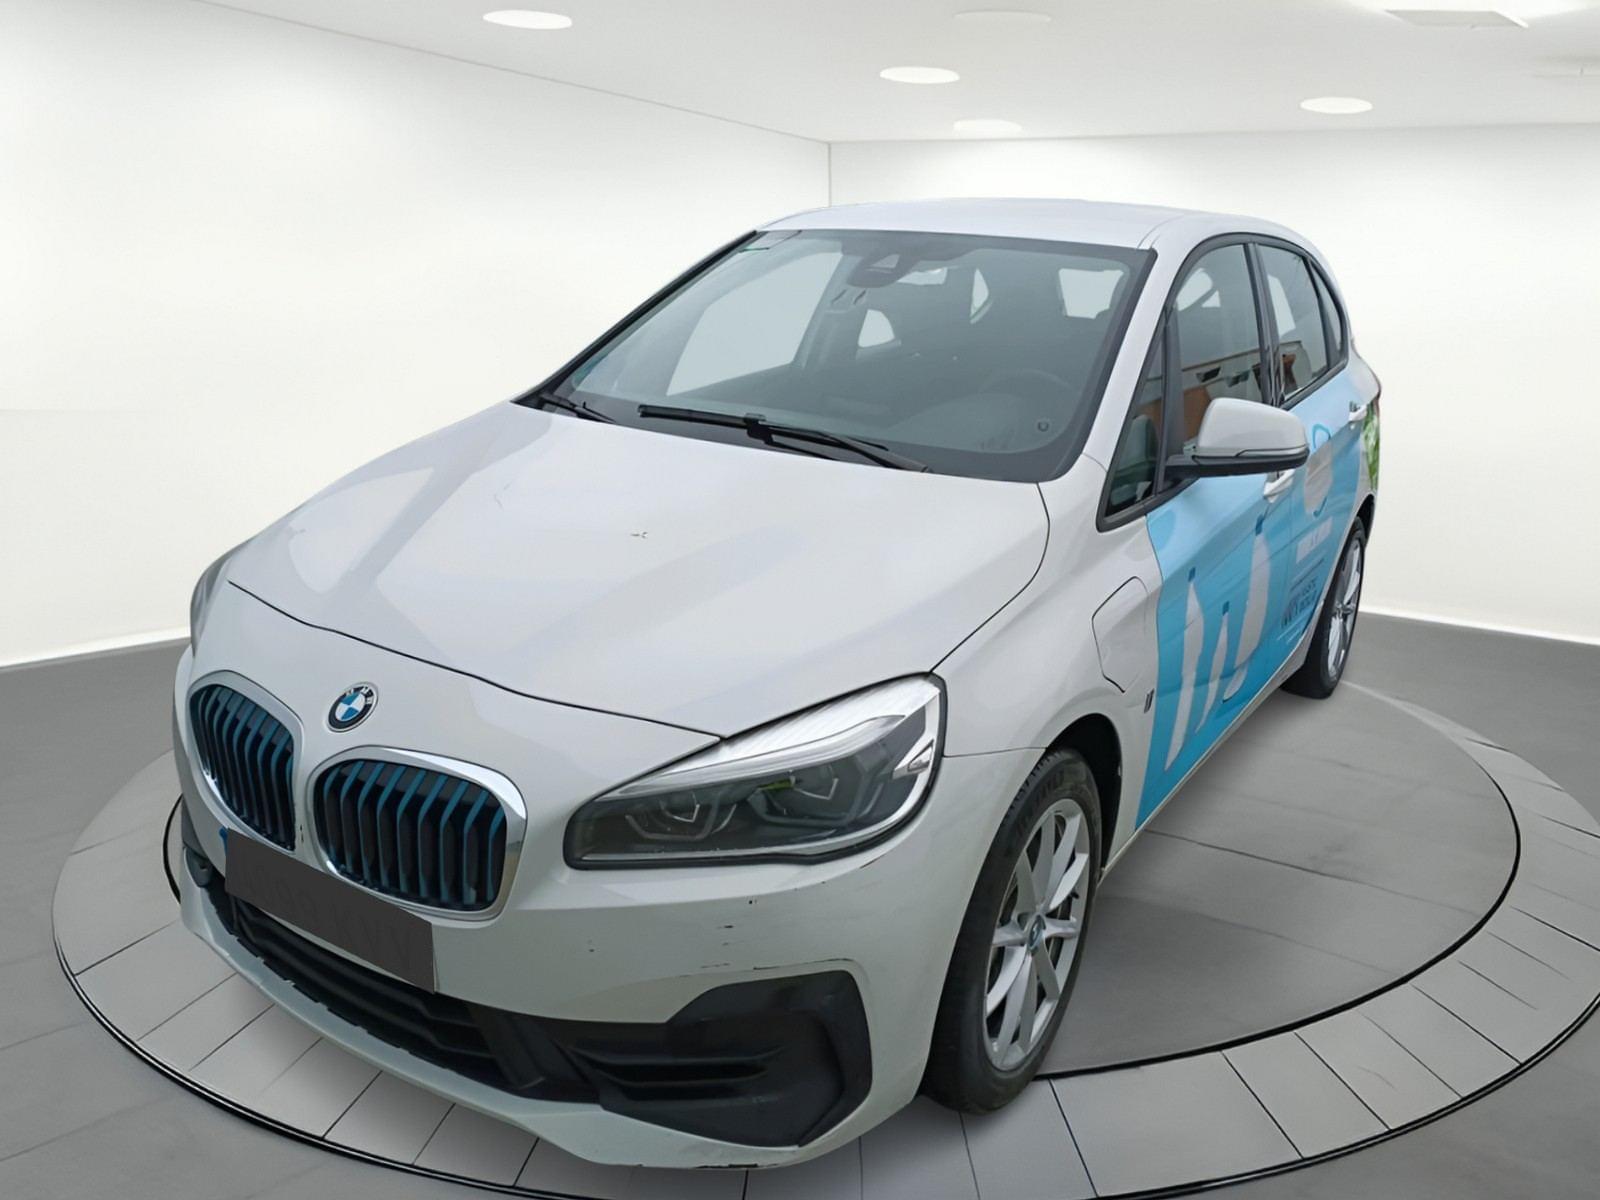 BMW SERIE 2 ACTIVE TOURER 225 XE IPERFORMANCE 1.5 225 CV AT6 E6DT 1 